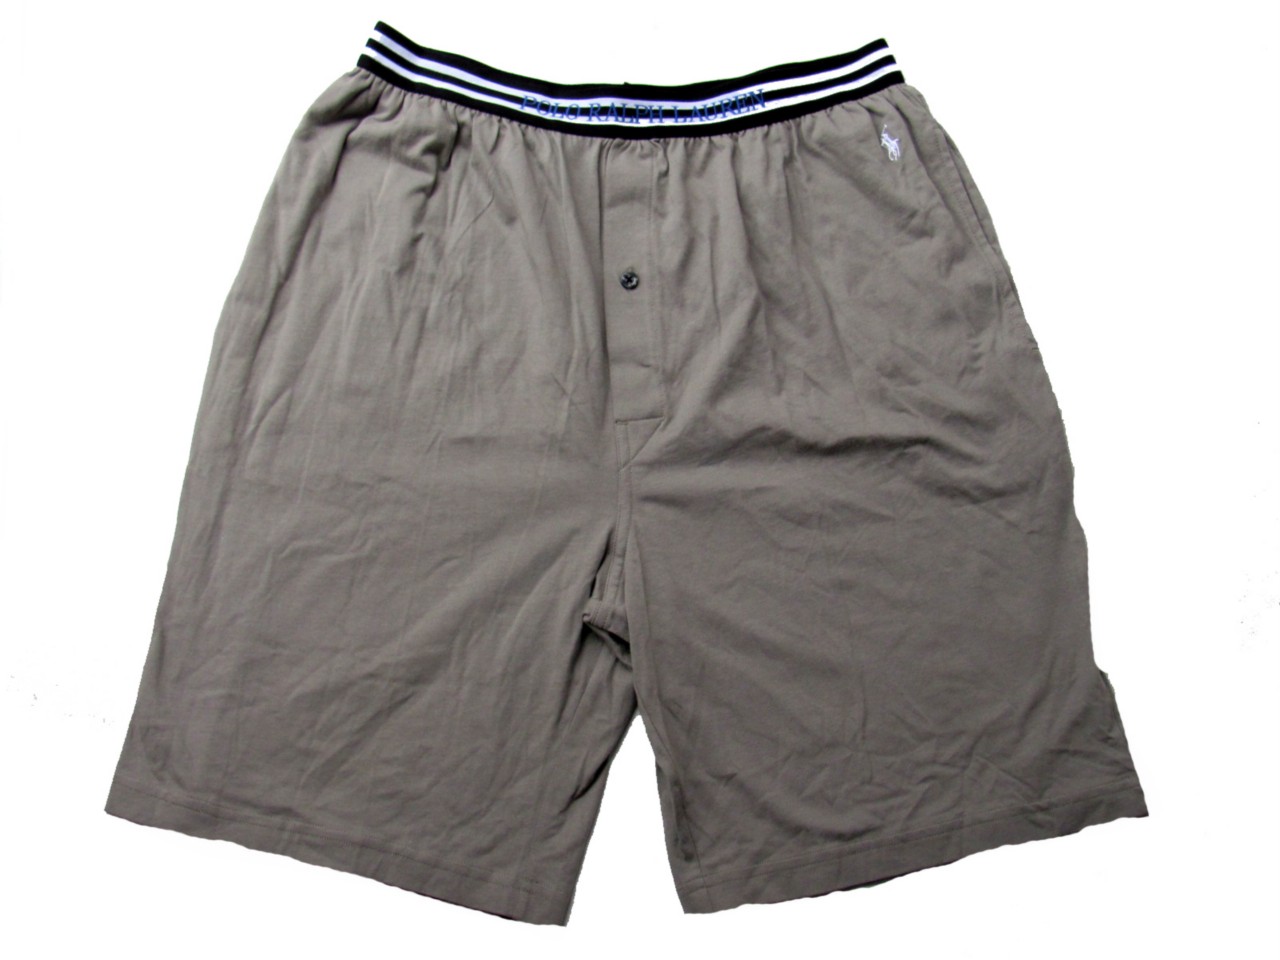 Polo Ralph Lauren Men's Gray Sleepwear Pajama Shorts | eBay